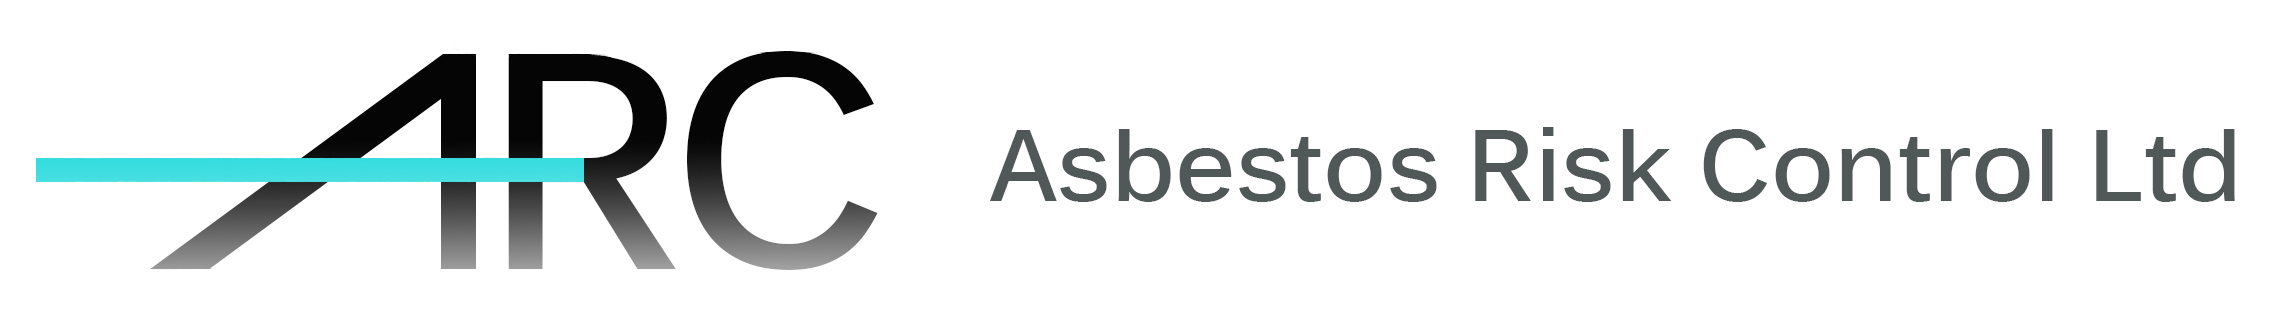 Asbestos Risk Control Ltd